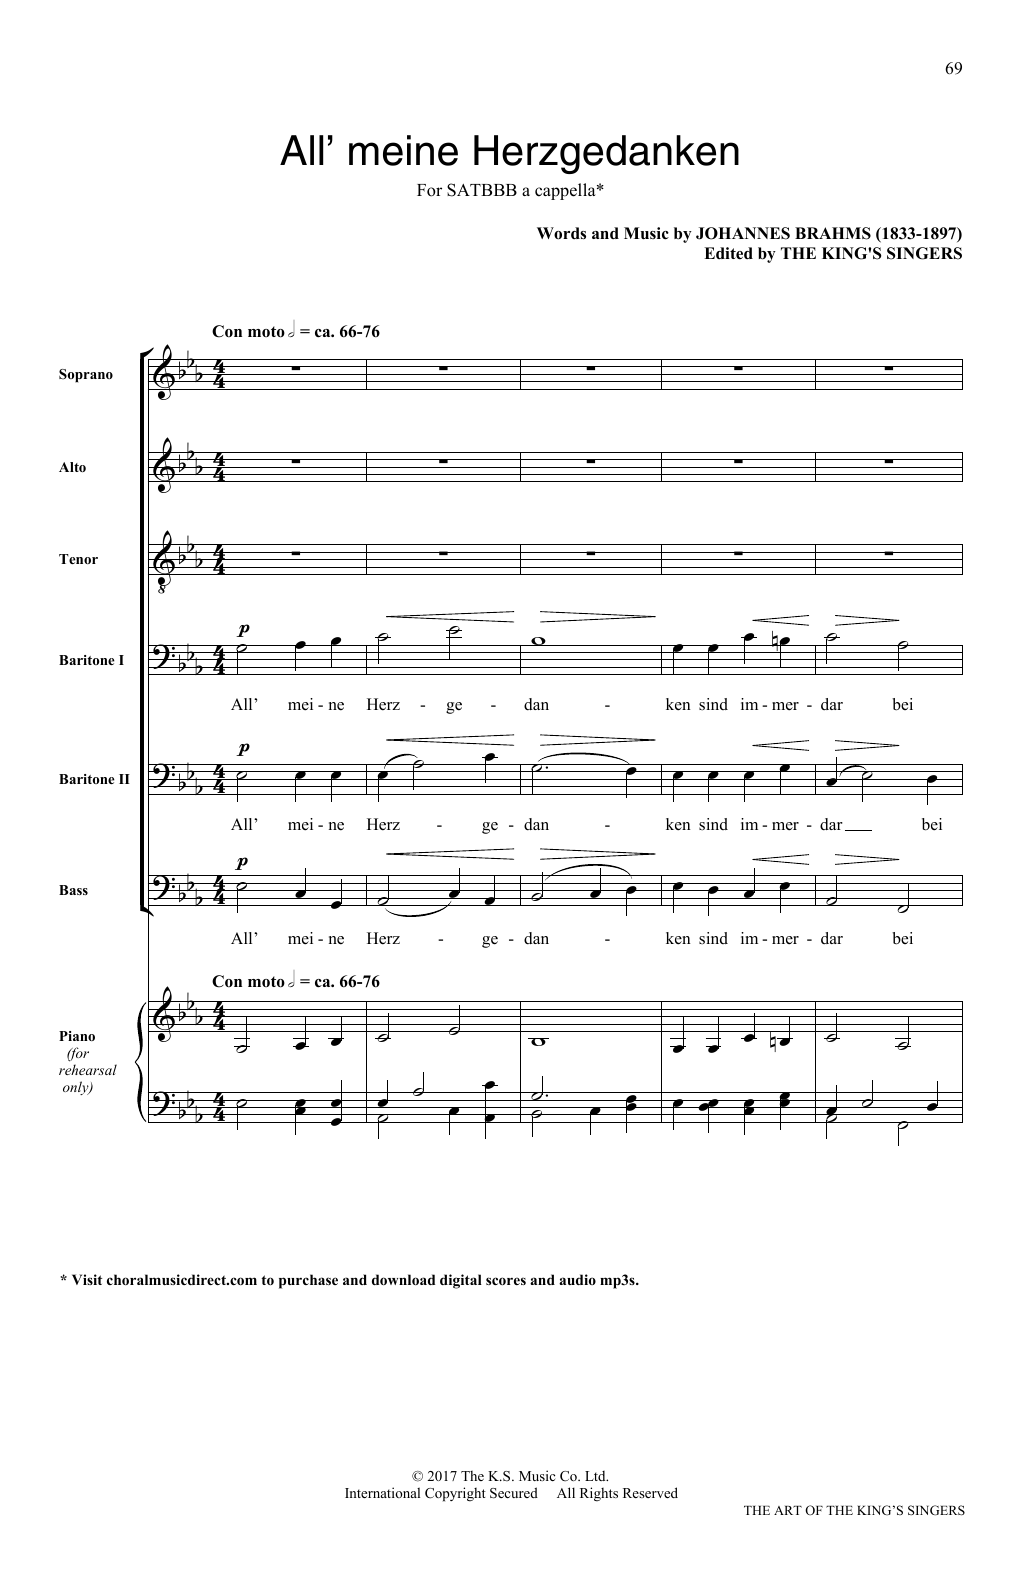 Johannes Brahms Alle meine Herzgedanken Sheet Music Notes & Chords for SATB - Download or Print PDF